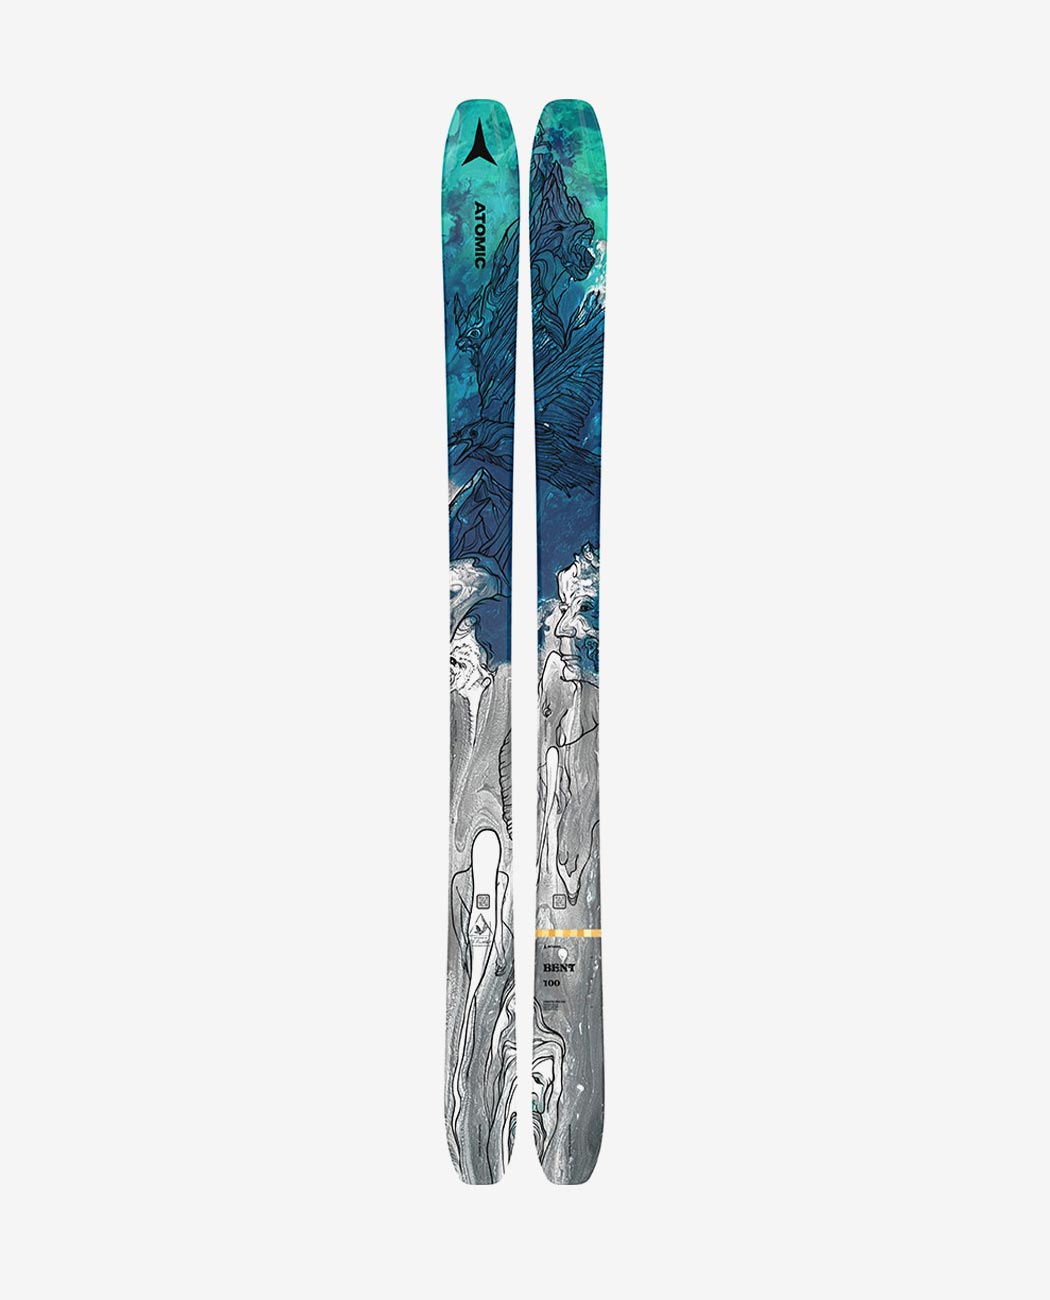 ski1